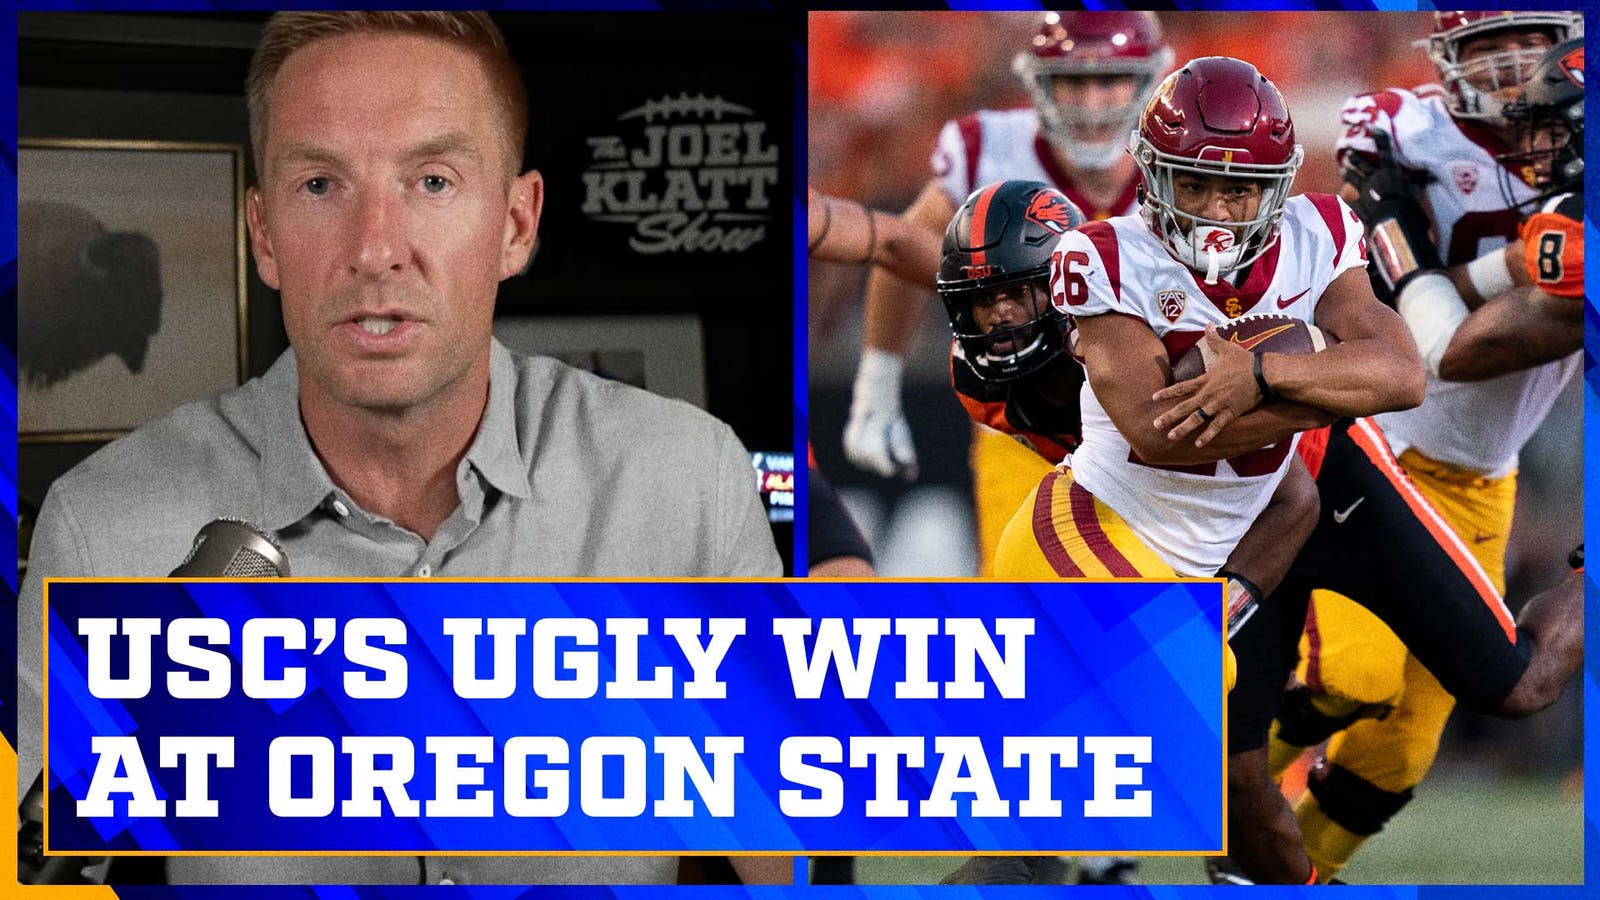 USC's ugly win at Oregon State: Trojans' defense shows up | The Joel Klatt Show